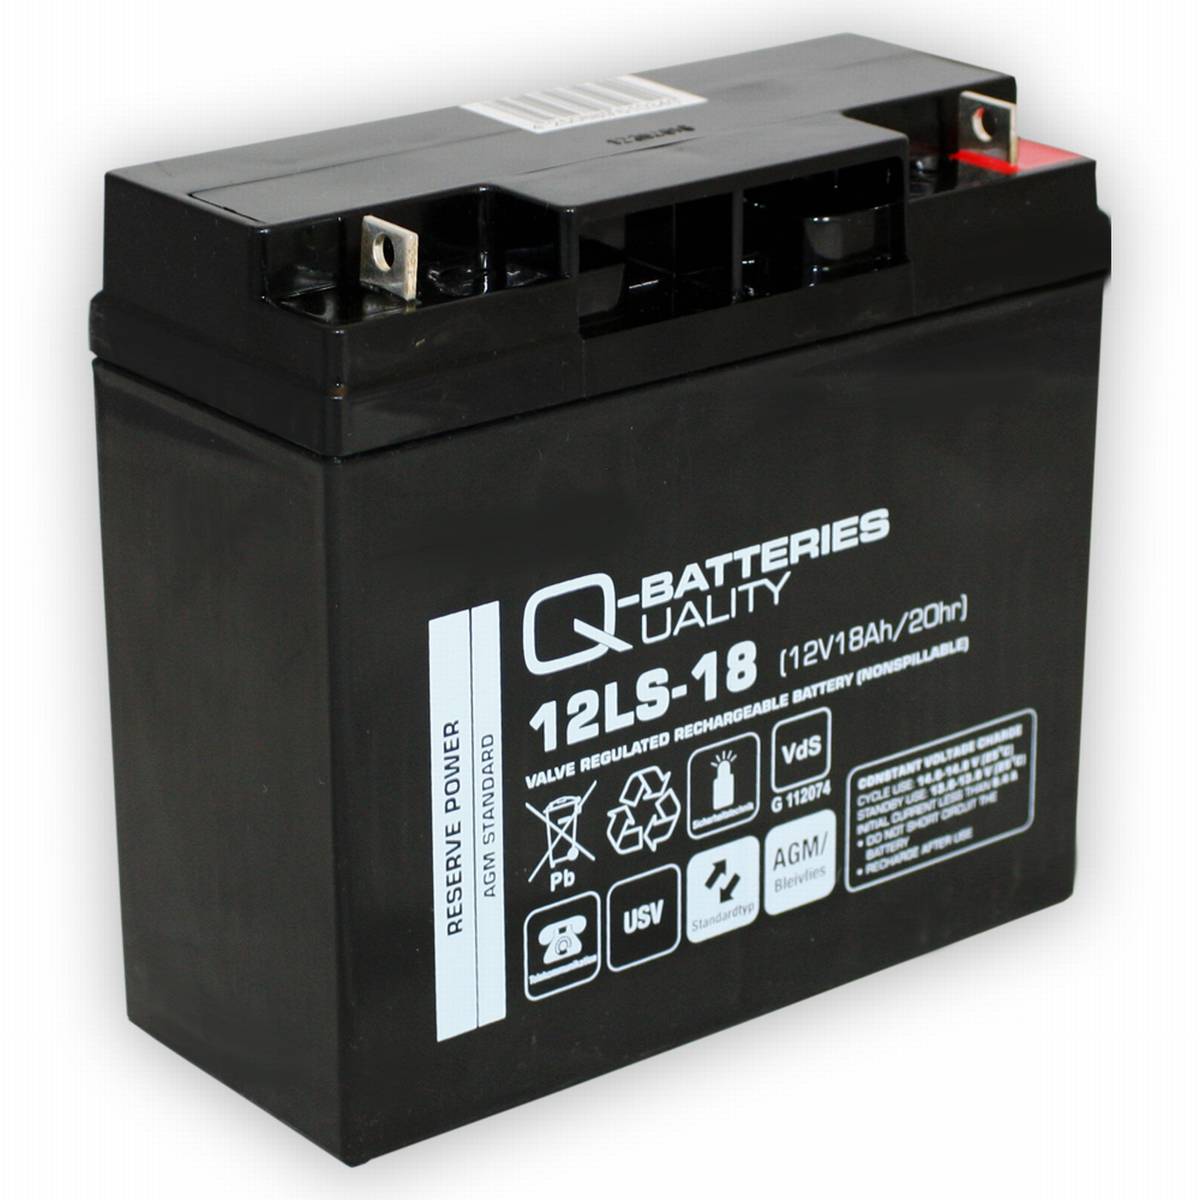 Q-Batterie 12LS-18 12V 18Ah batteria al piombo / AGM con VdS